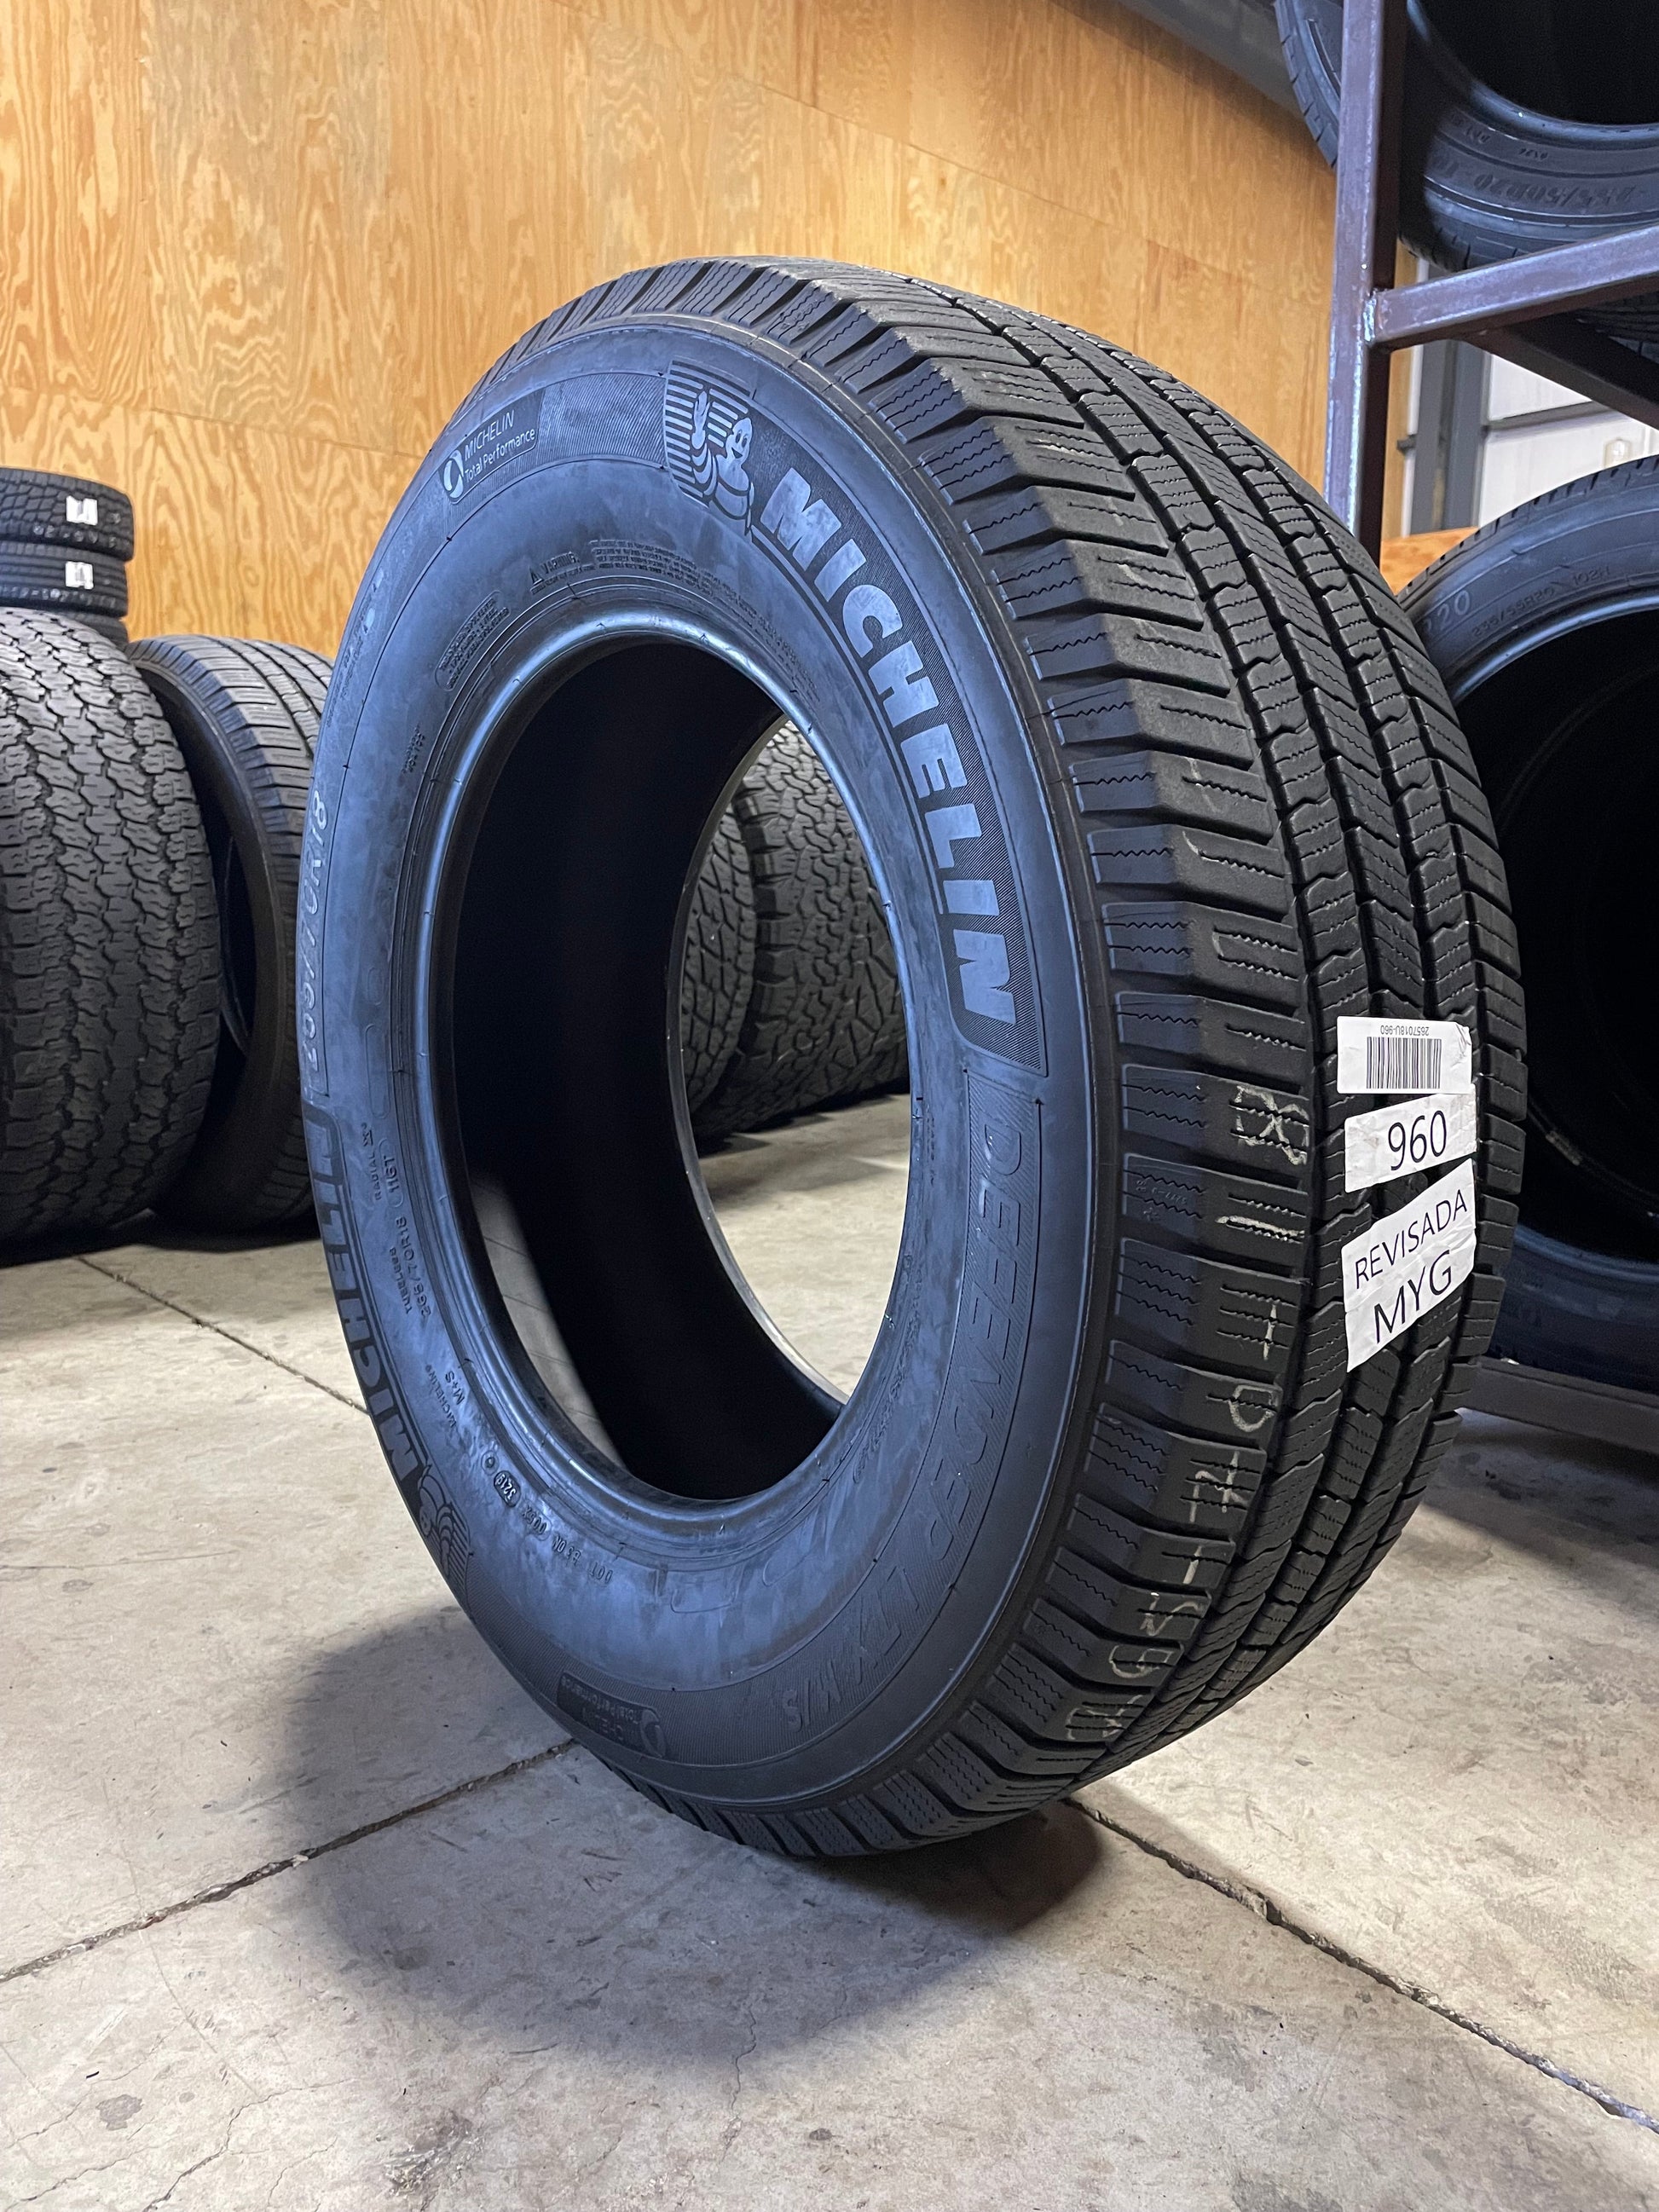 SINGLE 265/70R18 Michelin Defender LTX 114 T SL - Used Tires